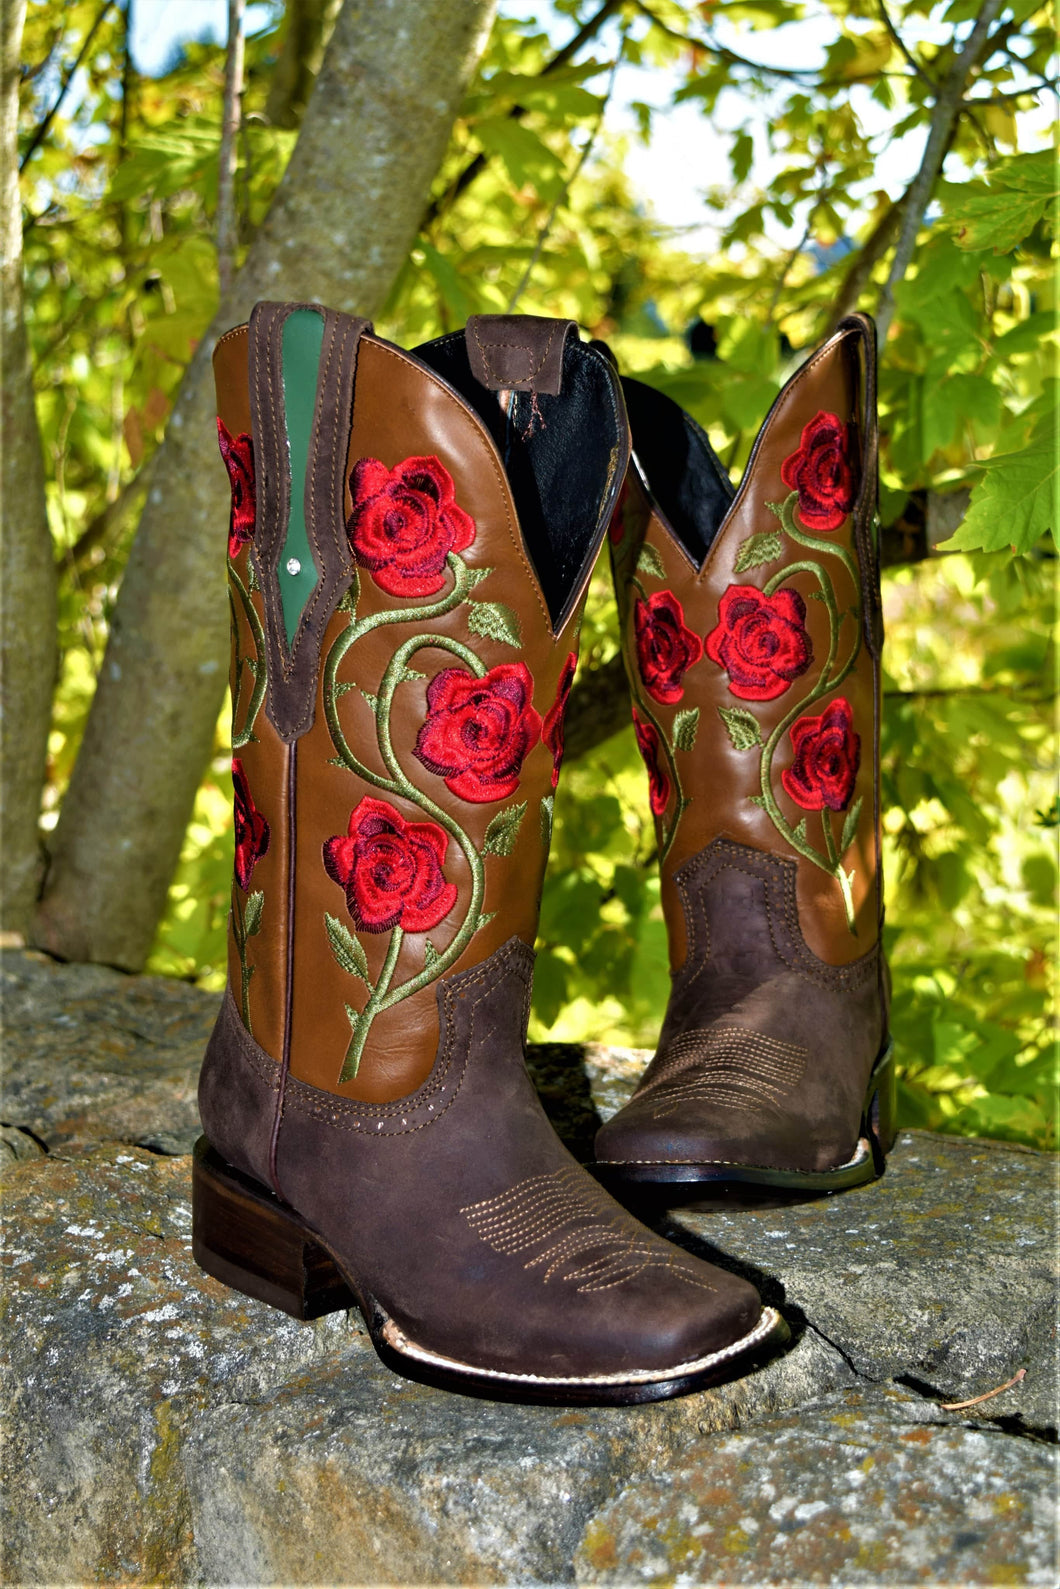 ROJITA Rodeo woman boots